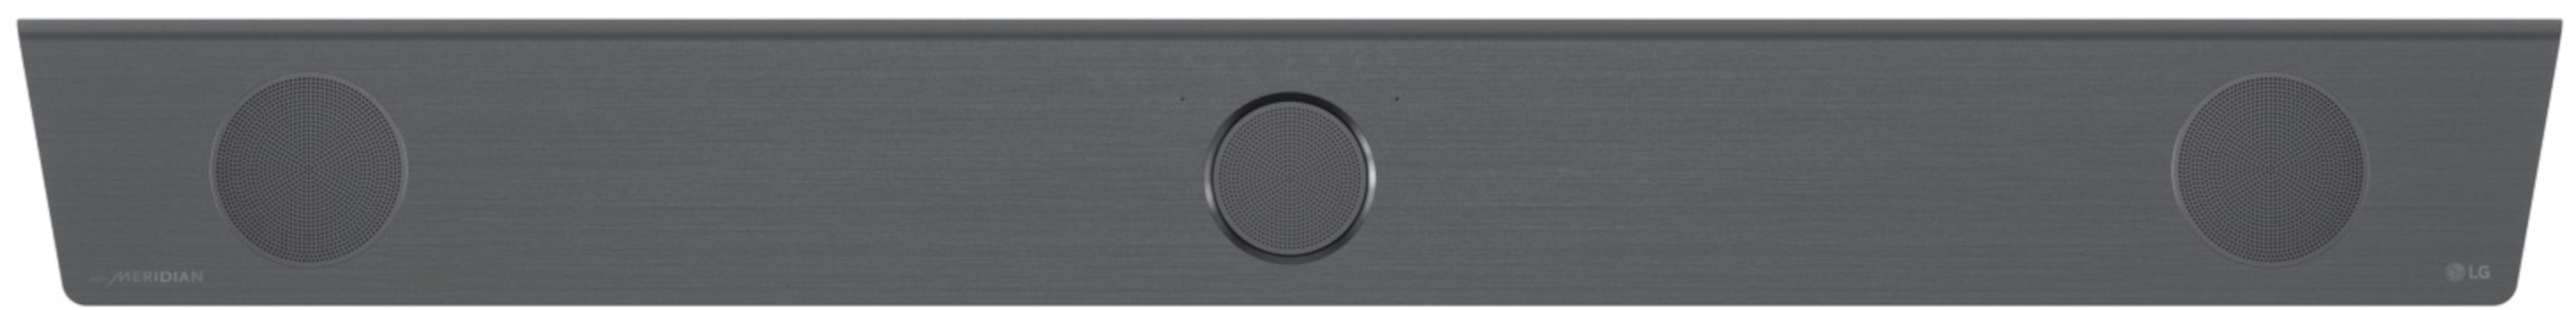 LG DS95QR, Soundbar, Dark Silver Steel